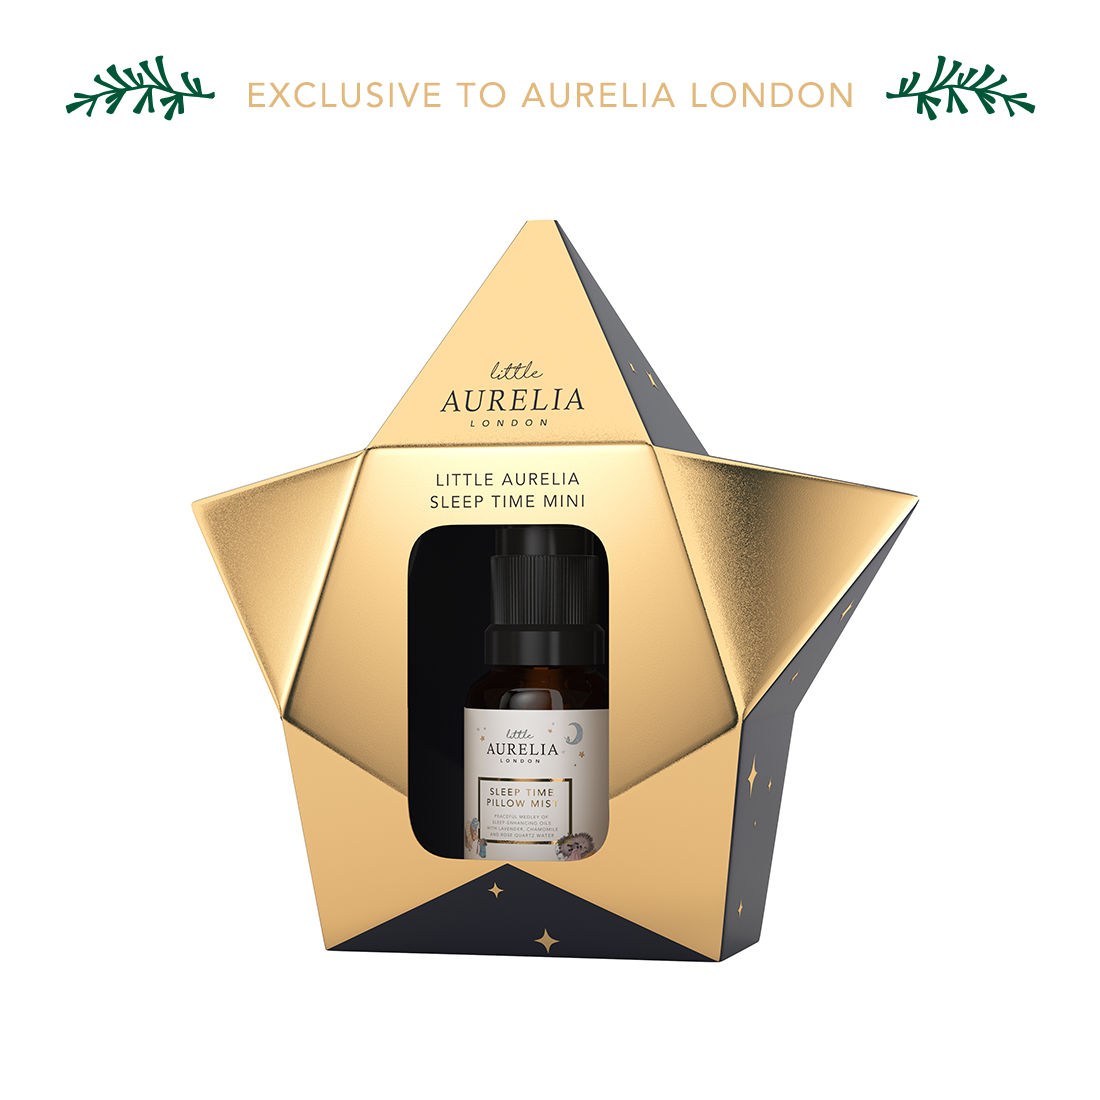 An image of Aurelia London, Little Aurelia Sleep Time Mini, Skincare Gift Bauble